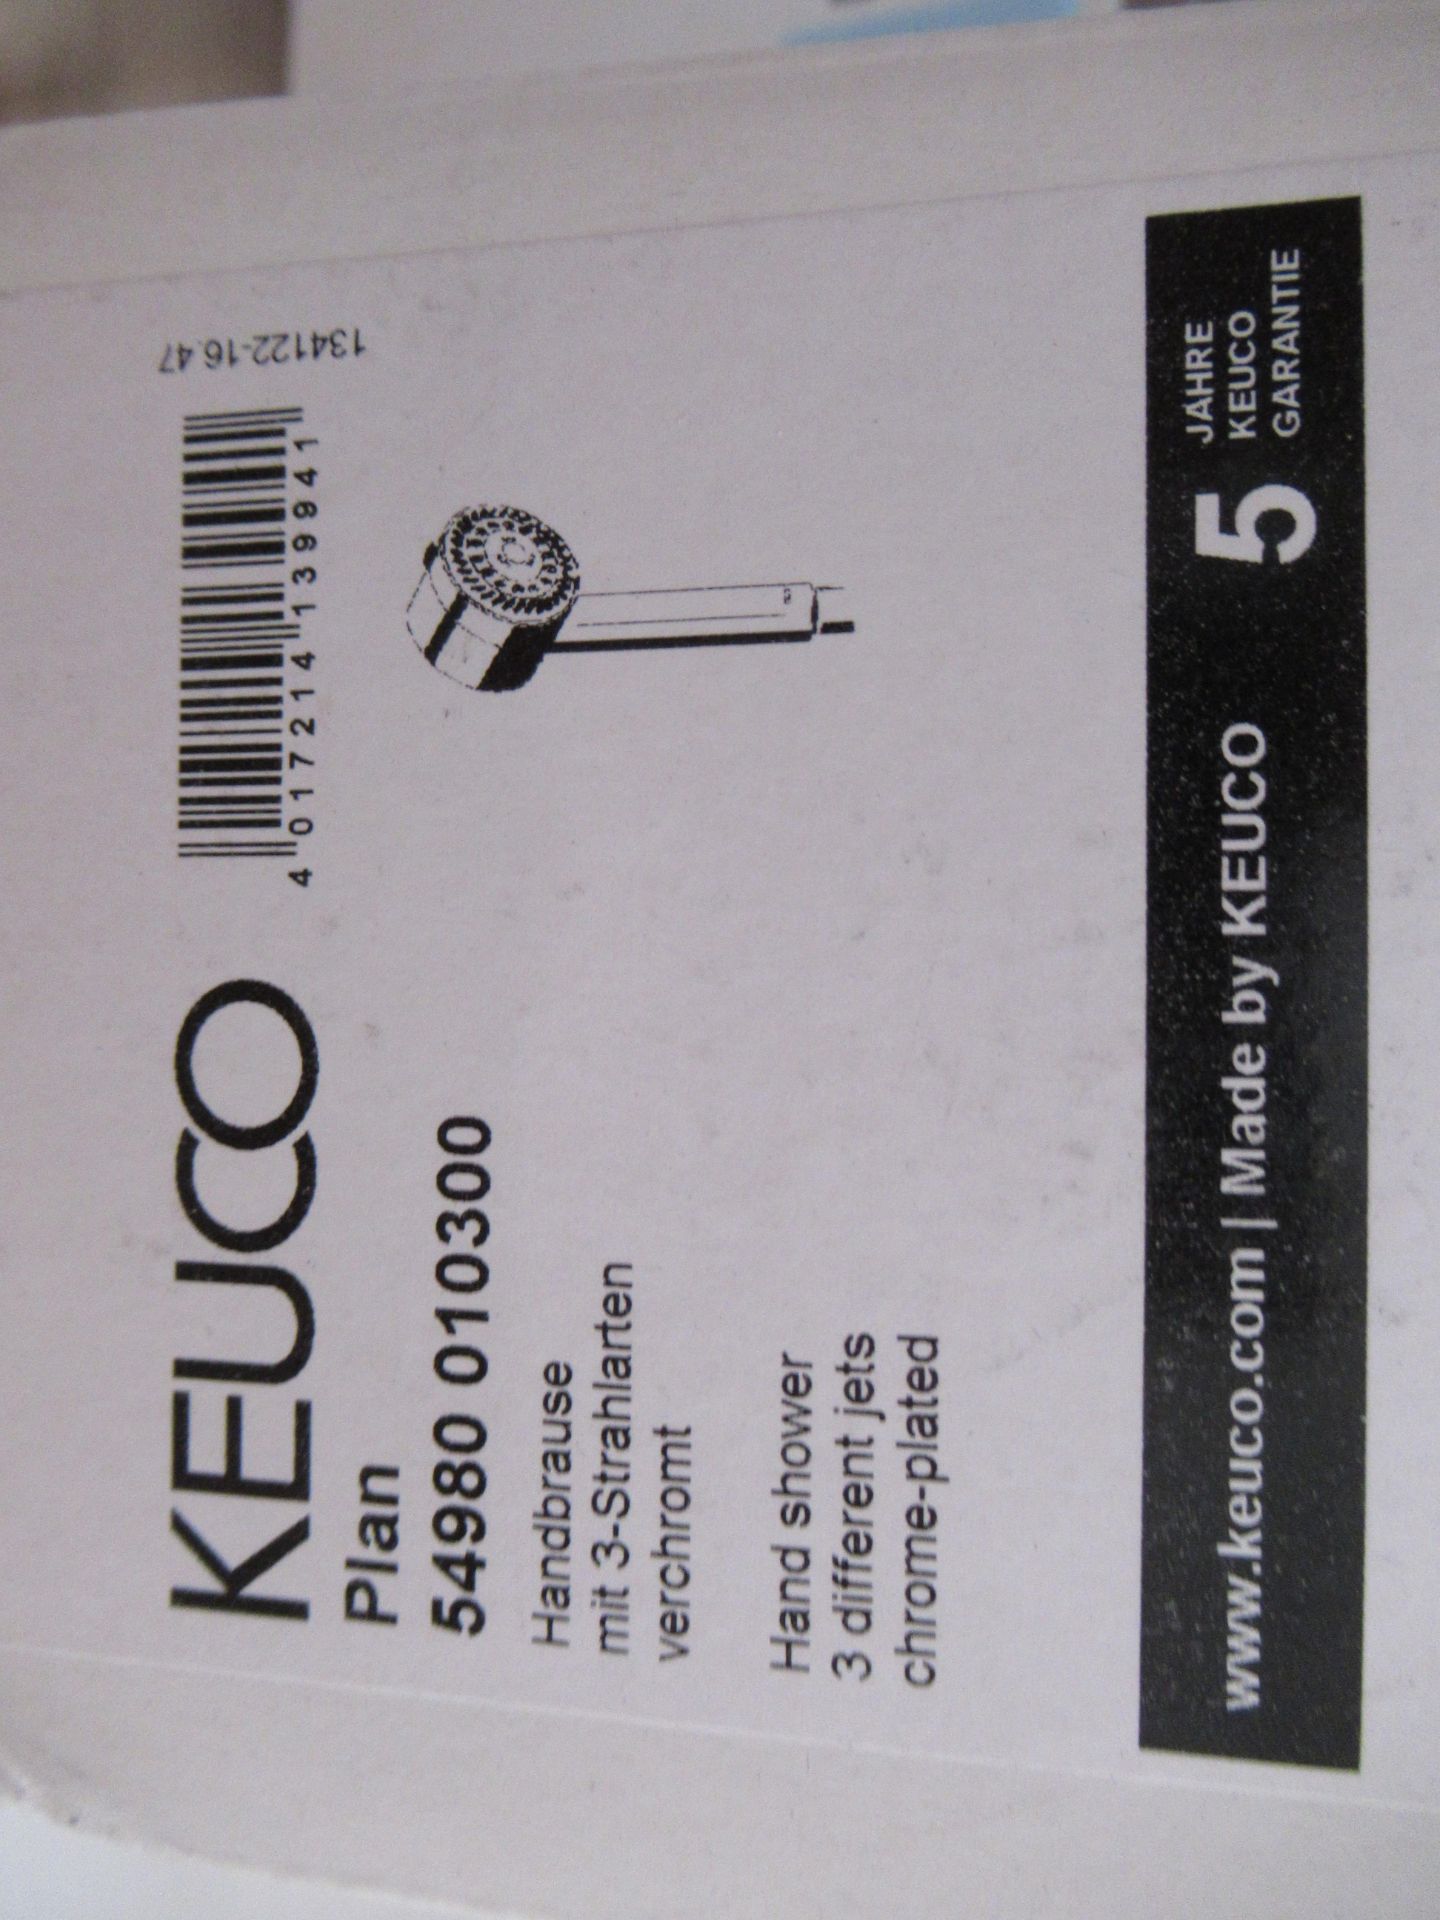 2 x Keuco Plan Hand Shower, Chrome Plated, P/N 54980-010300 - Image 2 of 2